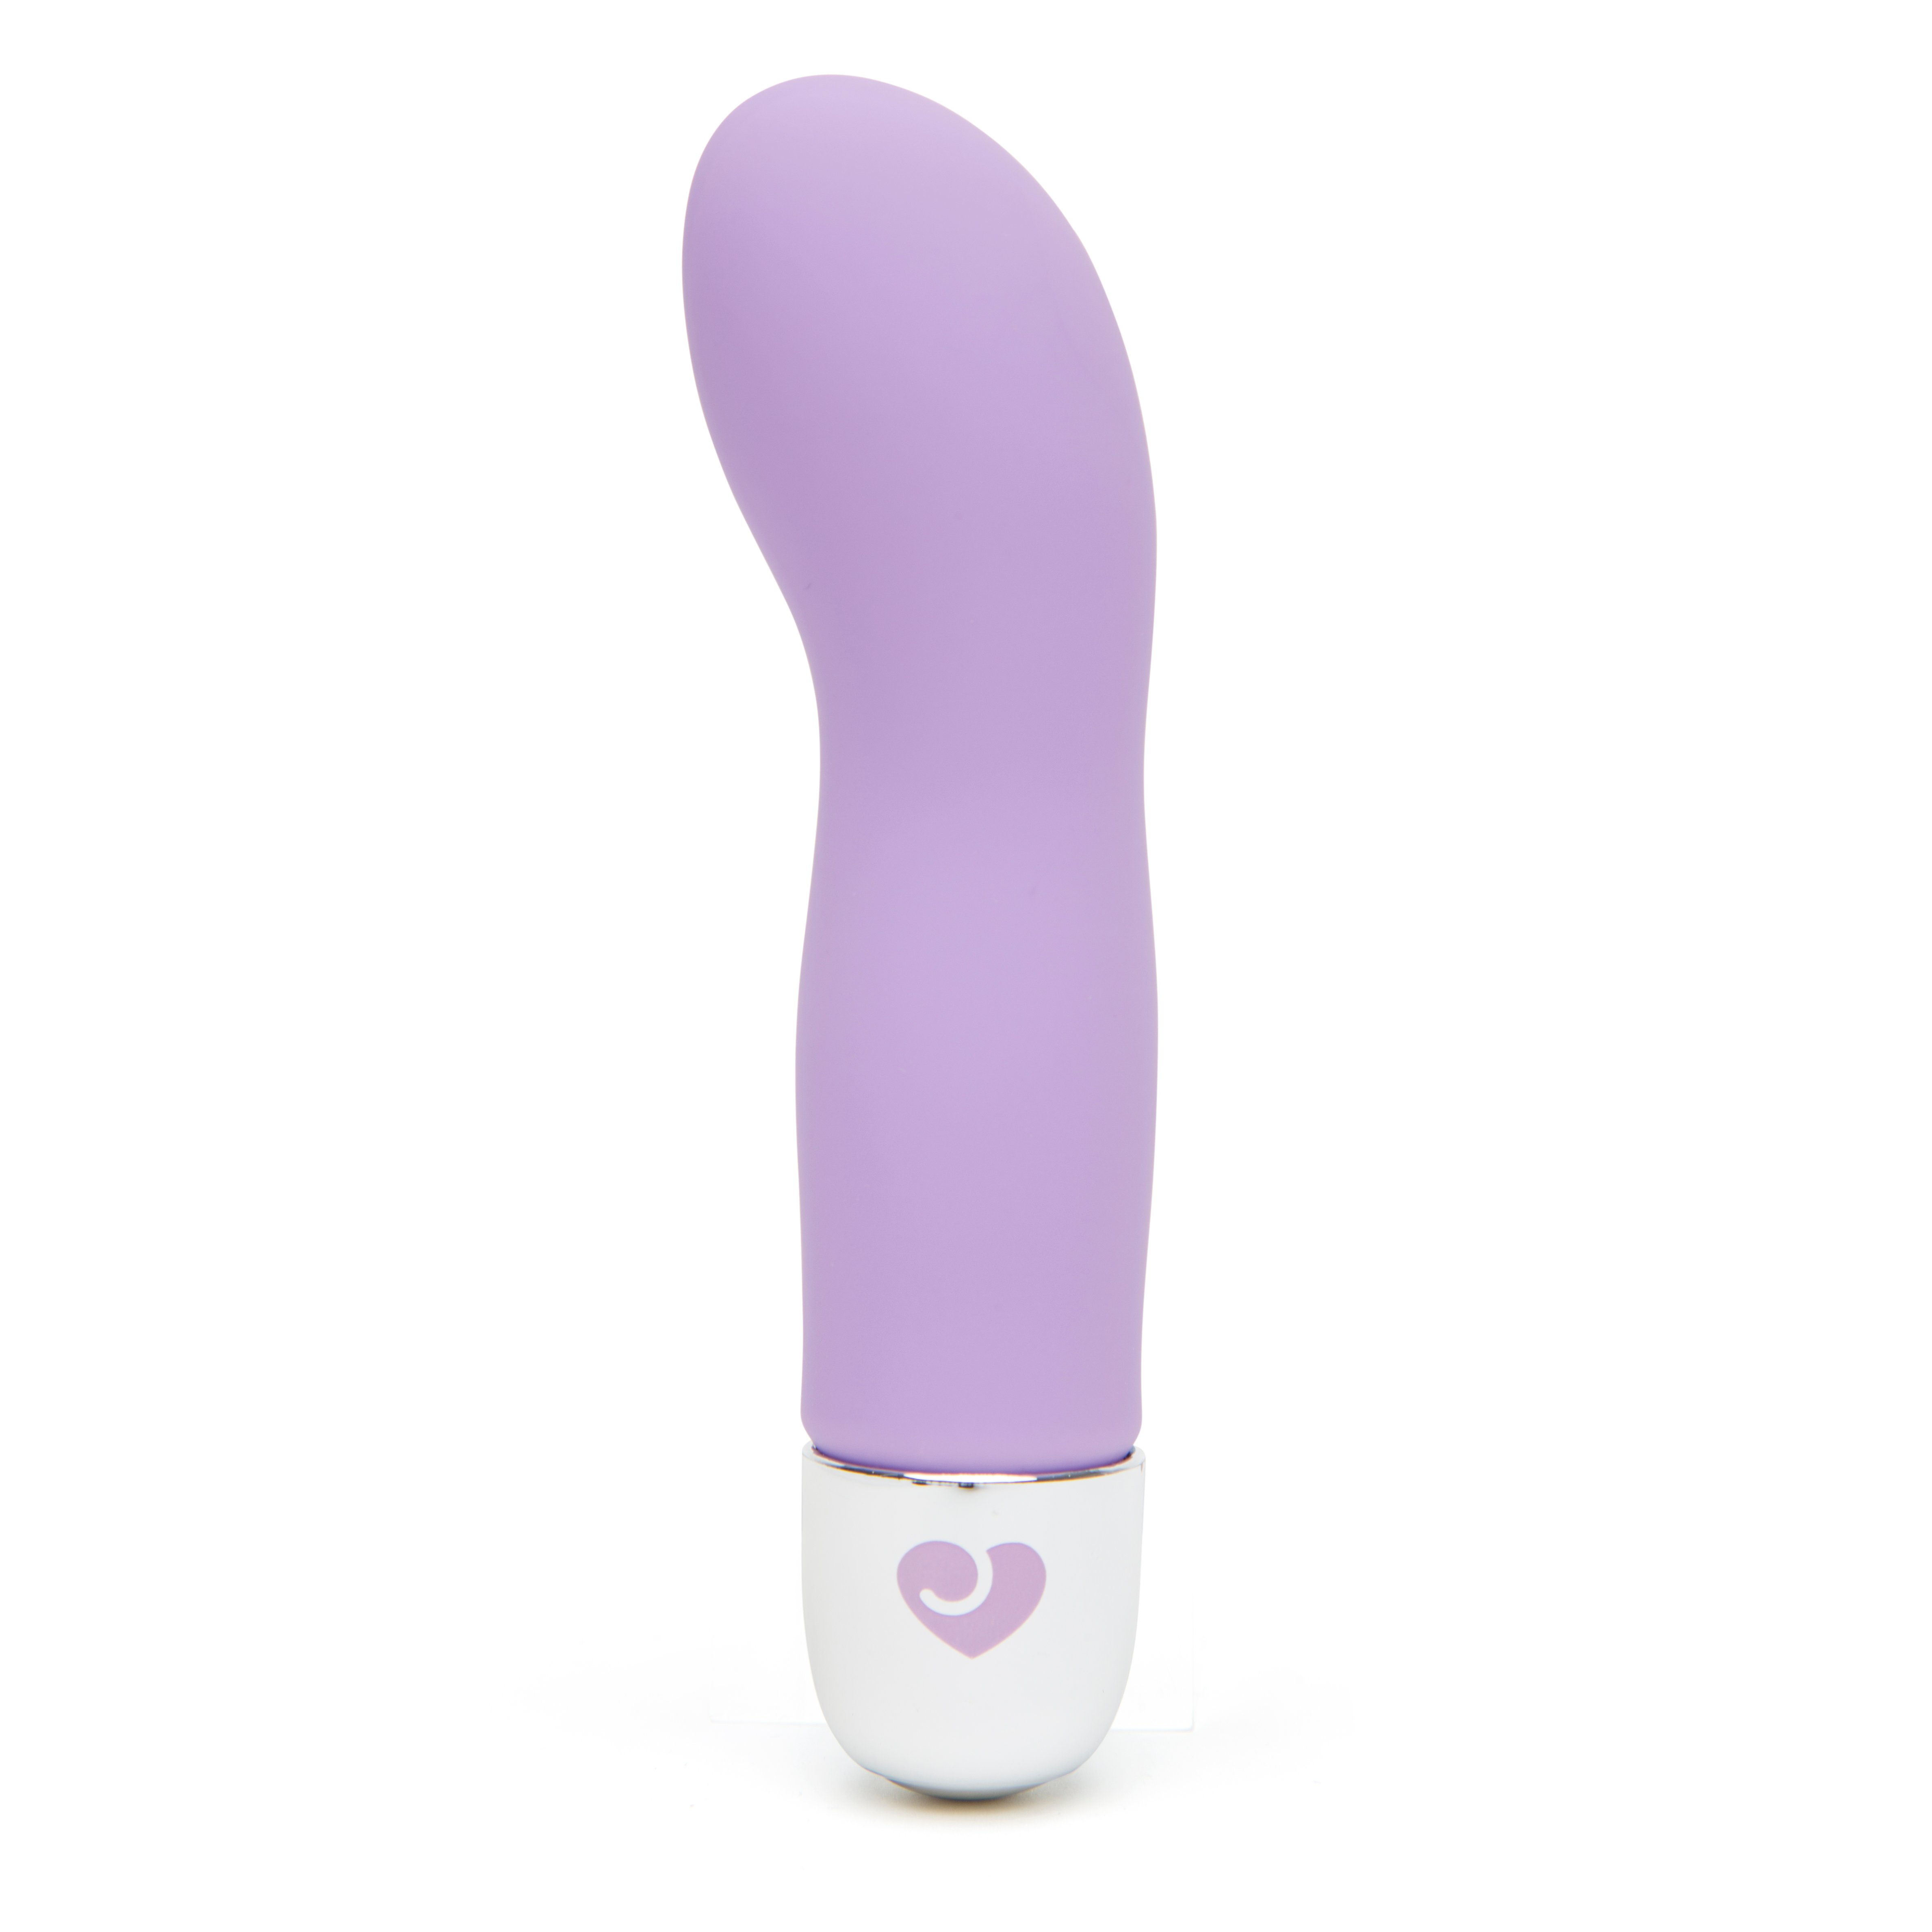 Lovehoney Frolic 10 Function Purple Silicone G-Spot Vibrator 